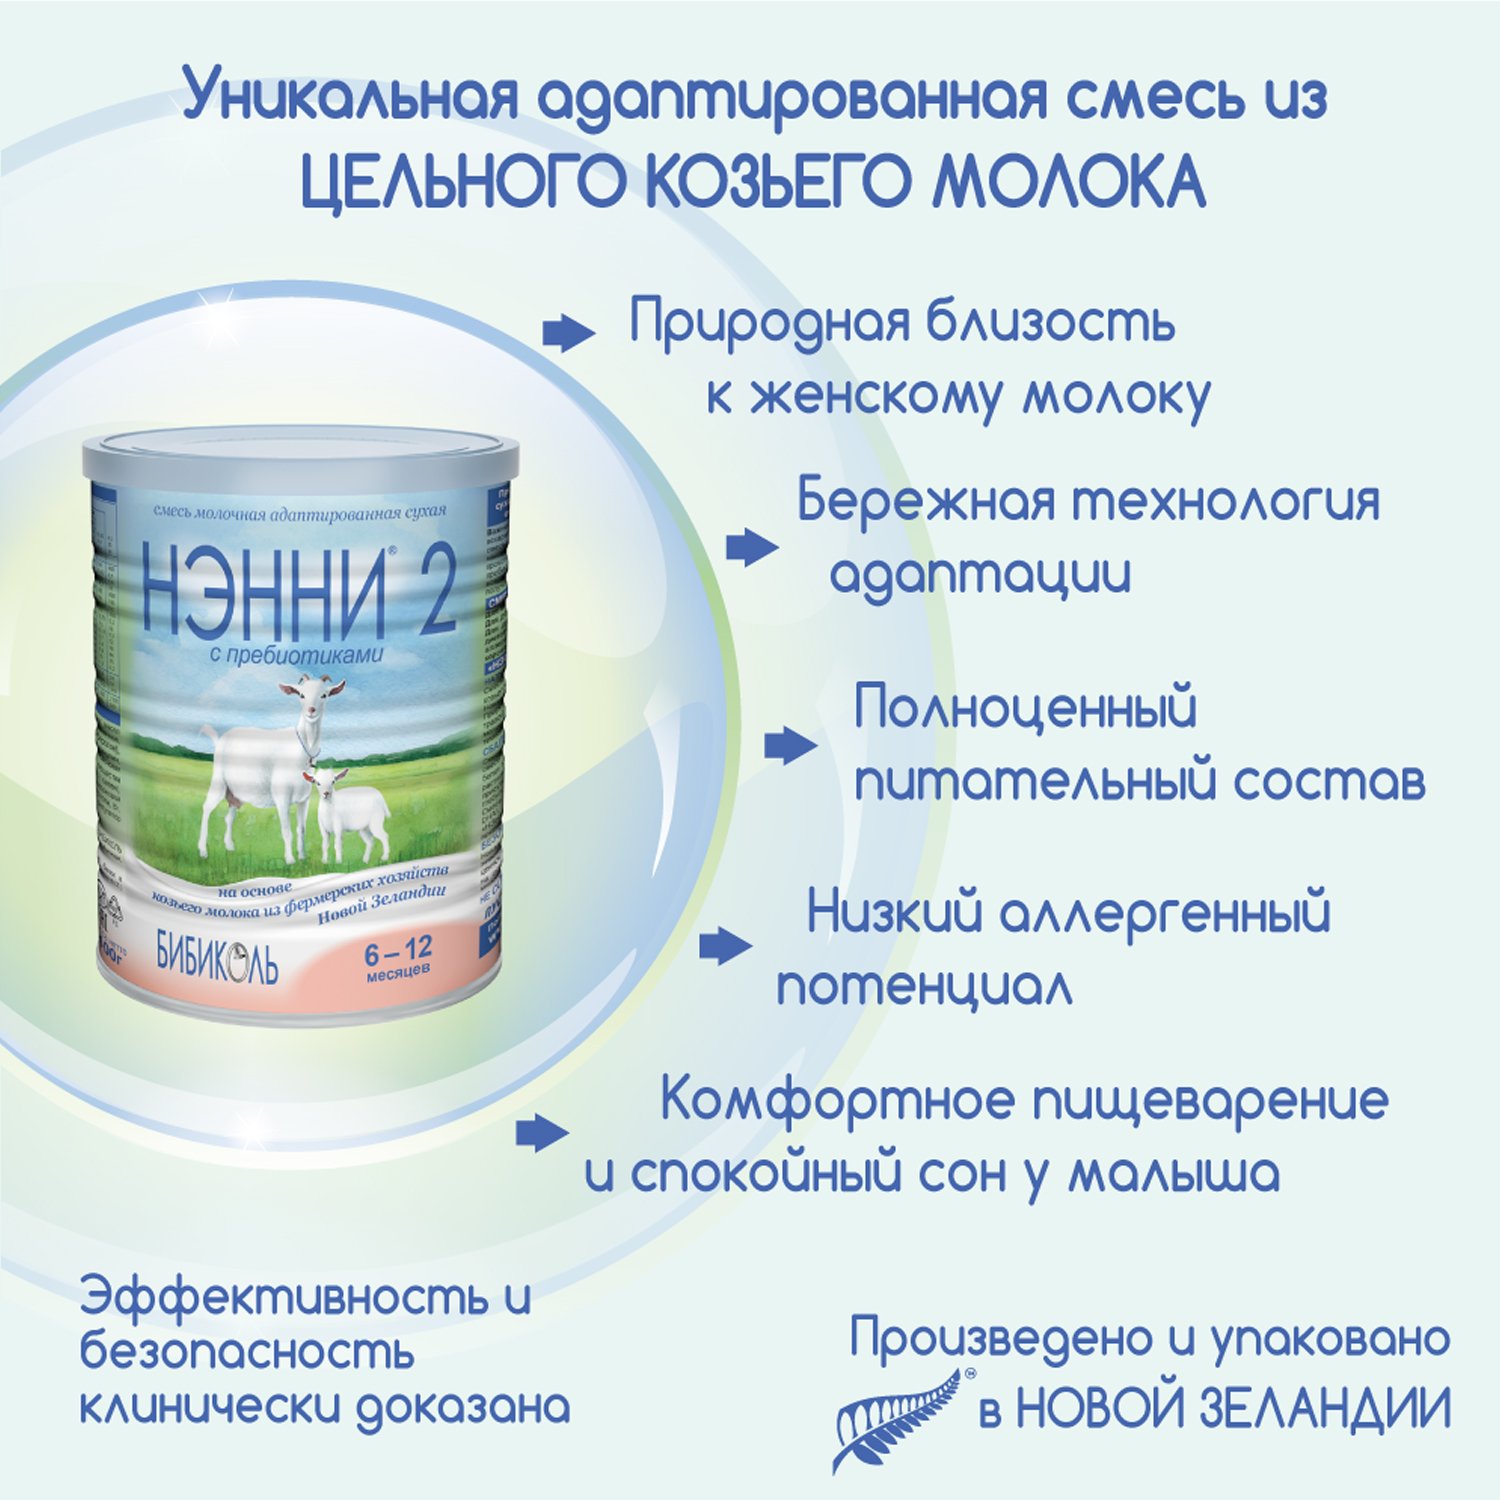 Молочная смесь Нэнни 2 с пребиотиками на основе козьего молока 400 г с 6-12 мес